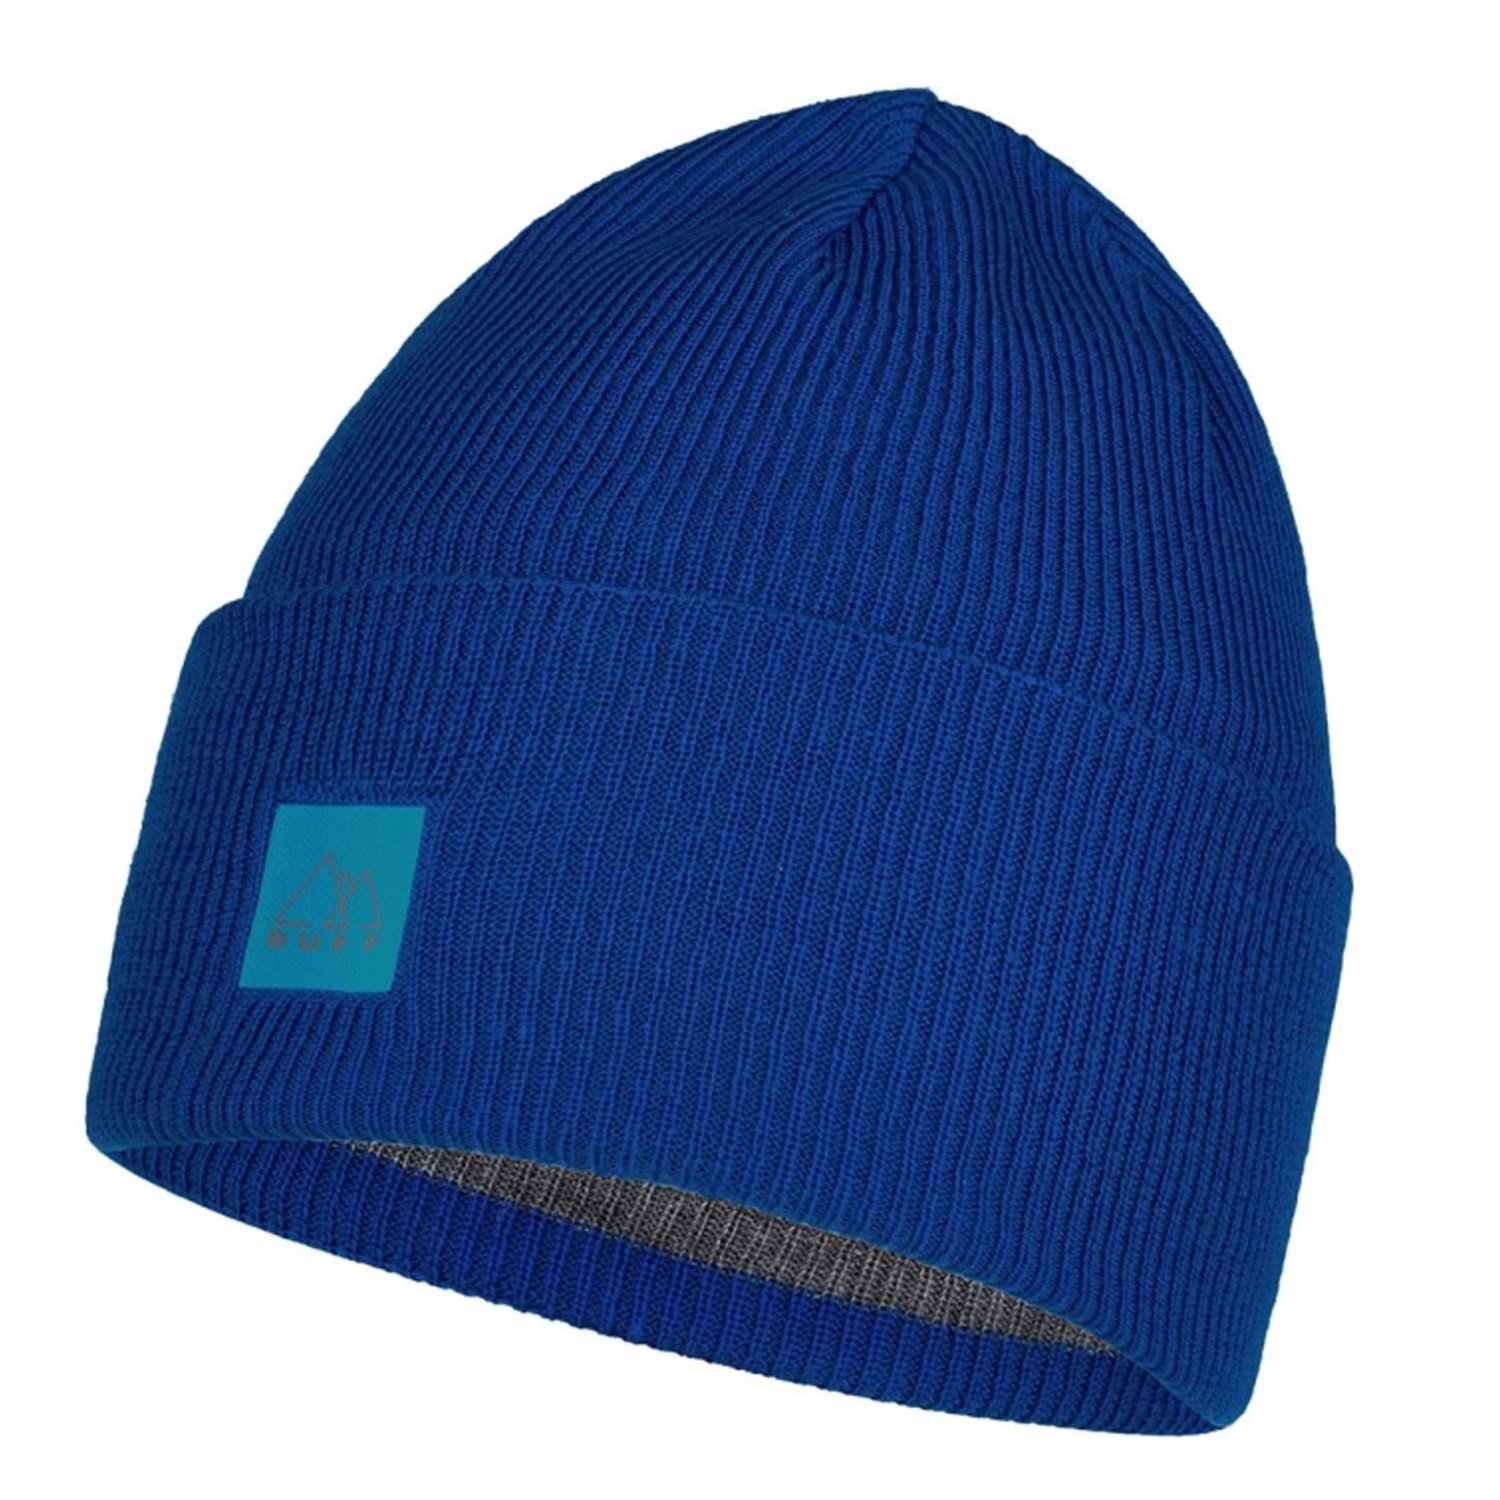 Шапка Buff Crossknit Hat Night, US:one size, синий, 132891.779.10.00 air optix night